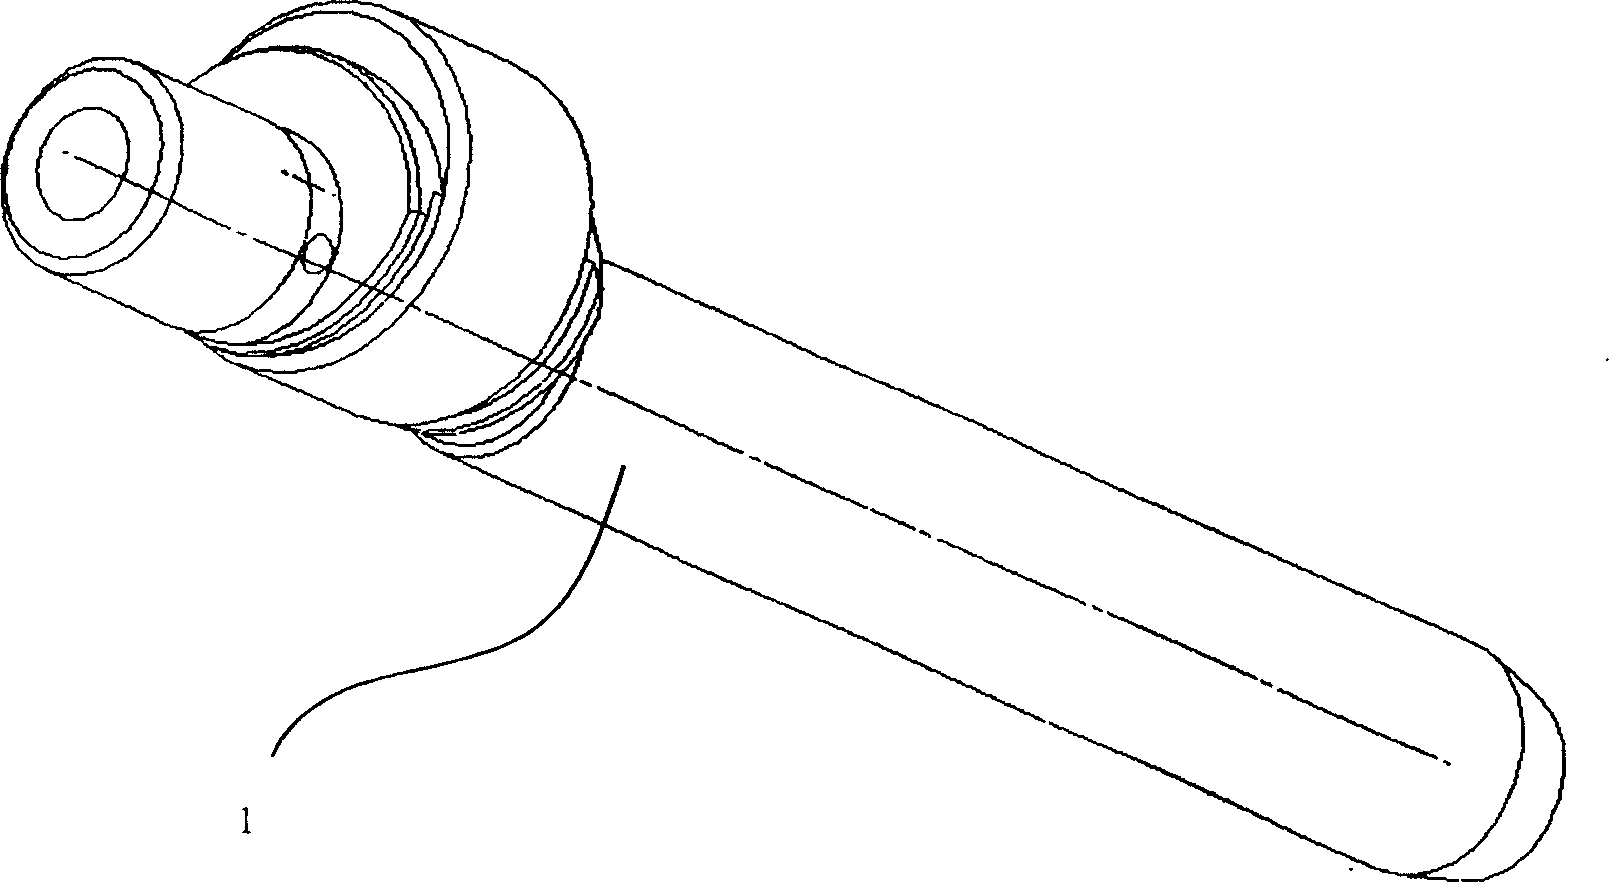 Rotor type compressor crankshaft TH face structure